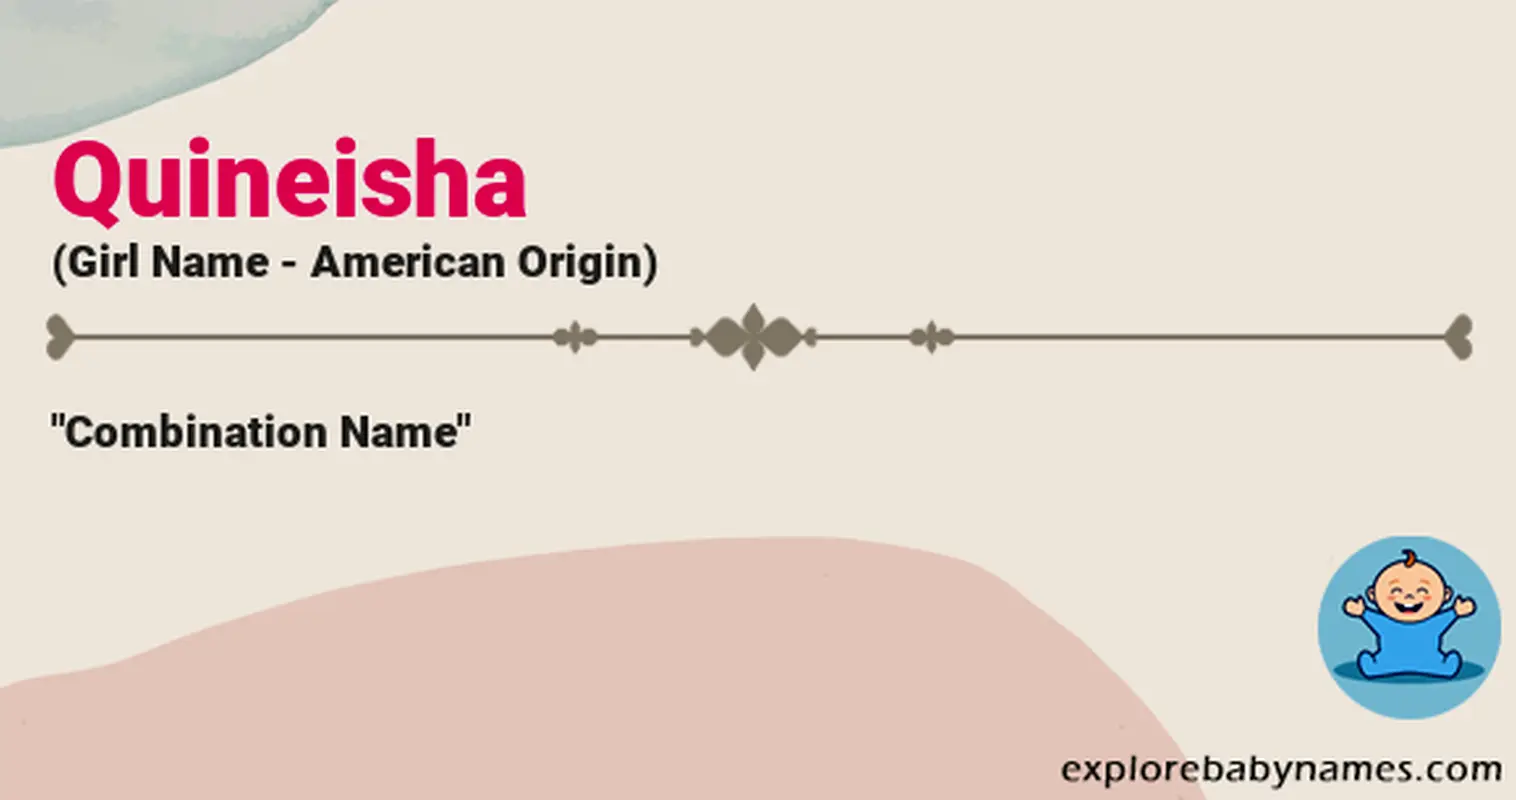 Meaning of Quineisha